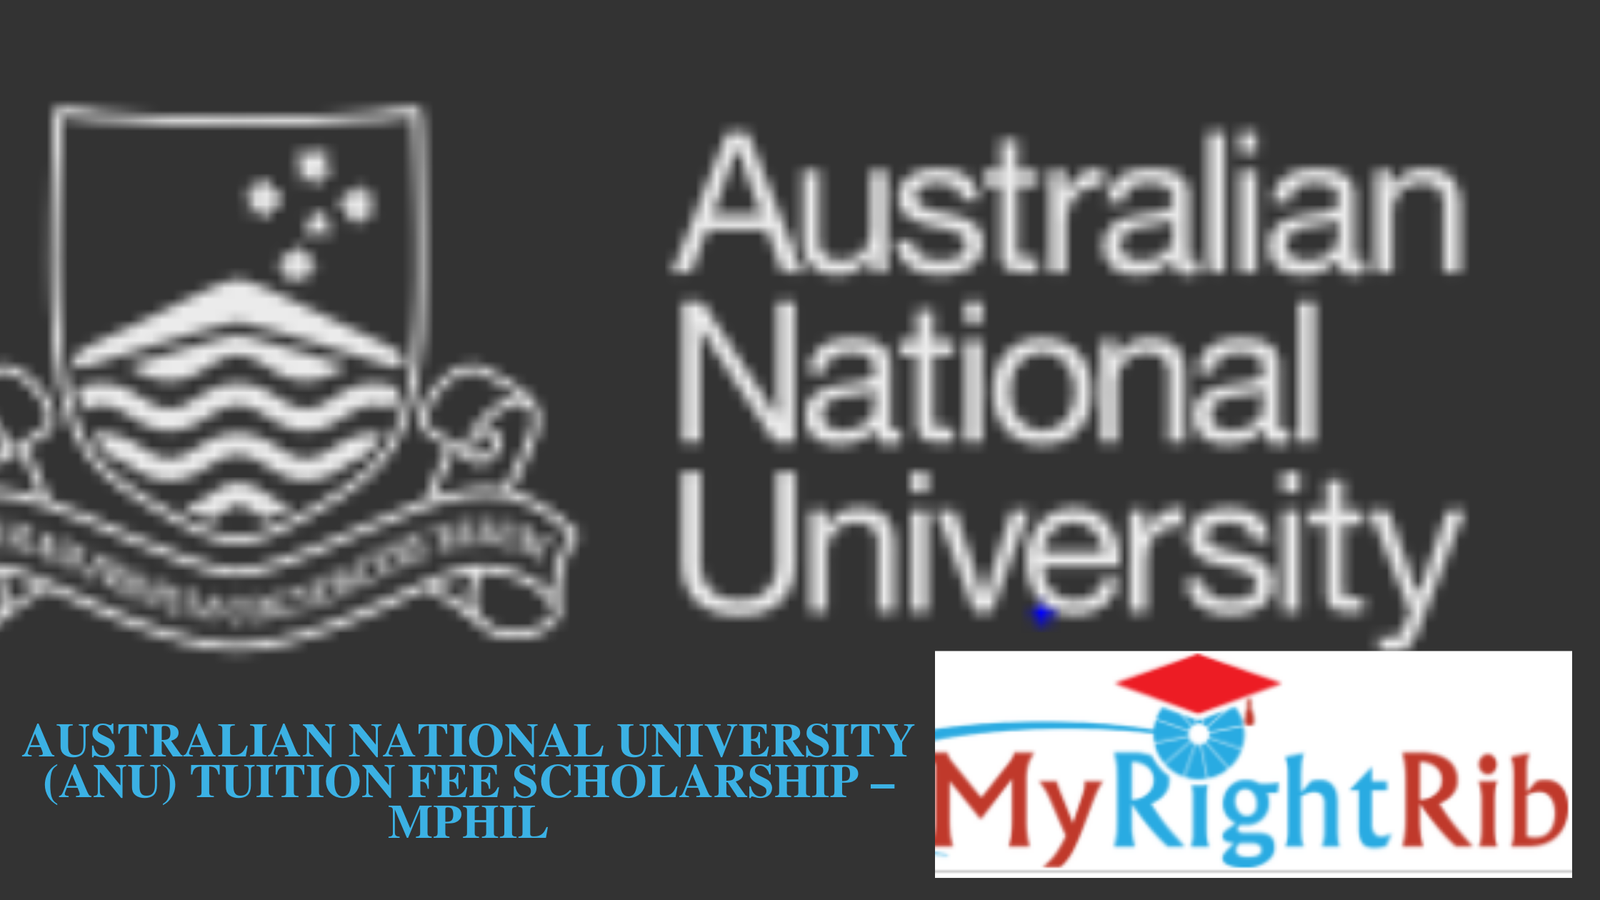 AUSTRALIAN NATIONAL UNIVERSITY (ANU) TUITION FEE SCHOLARSHIP – MPhil